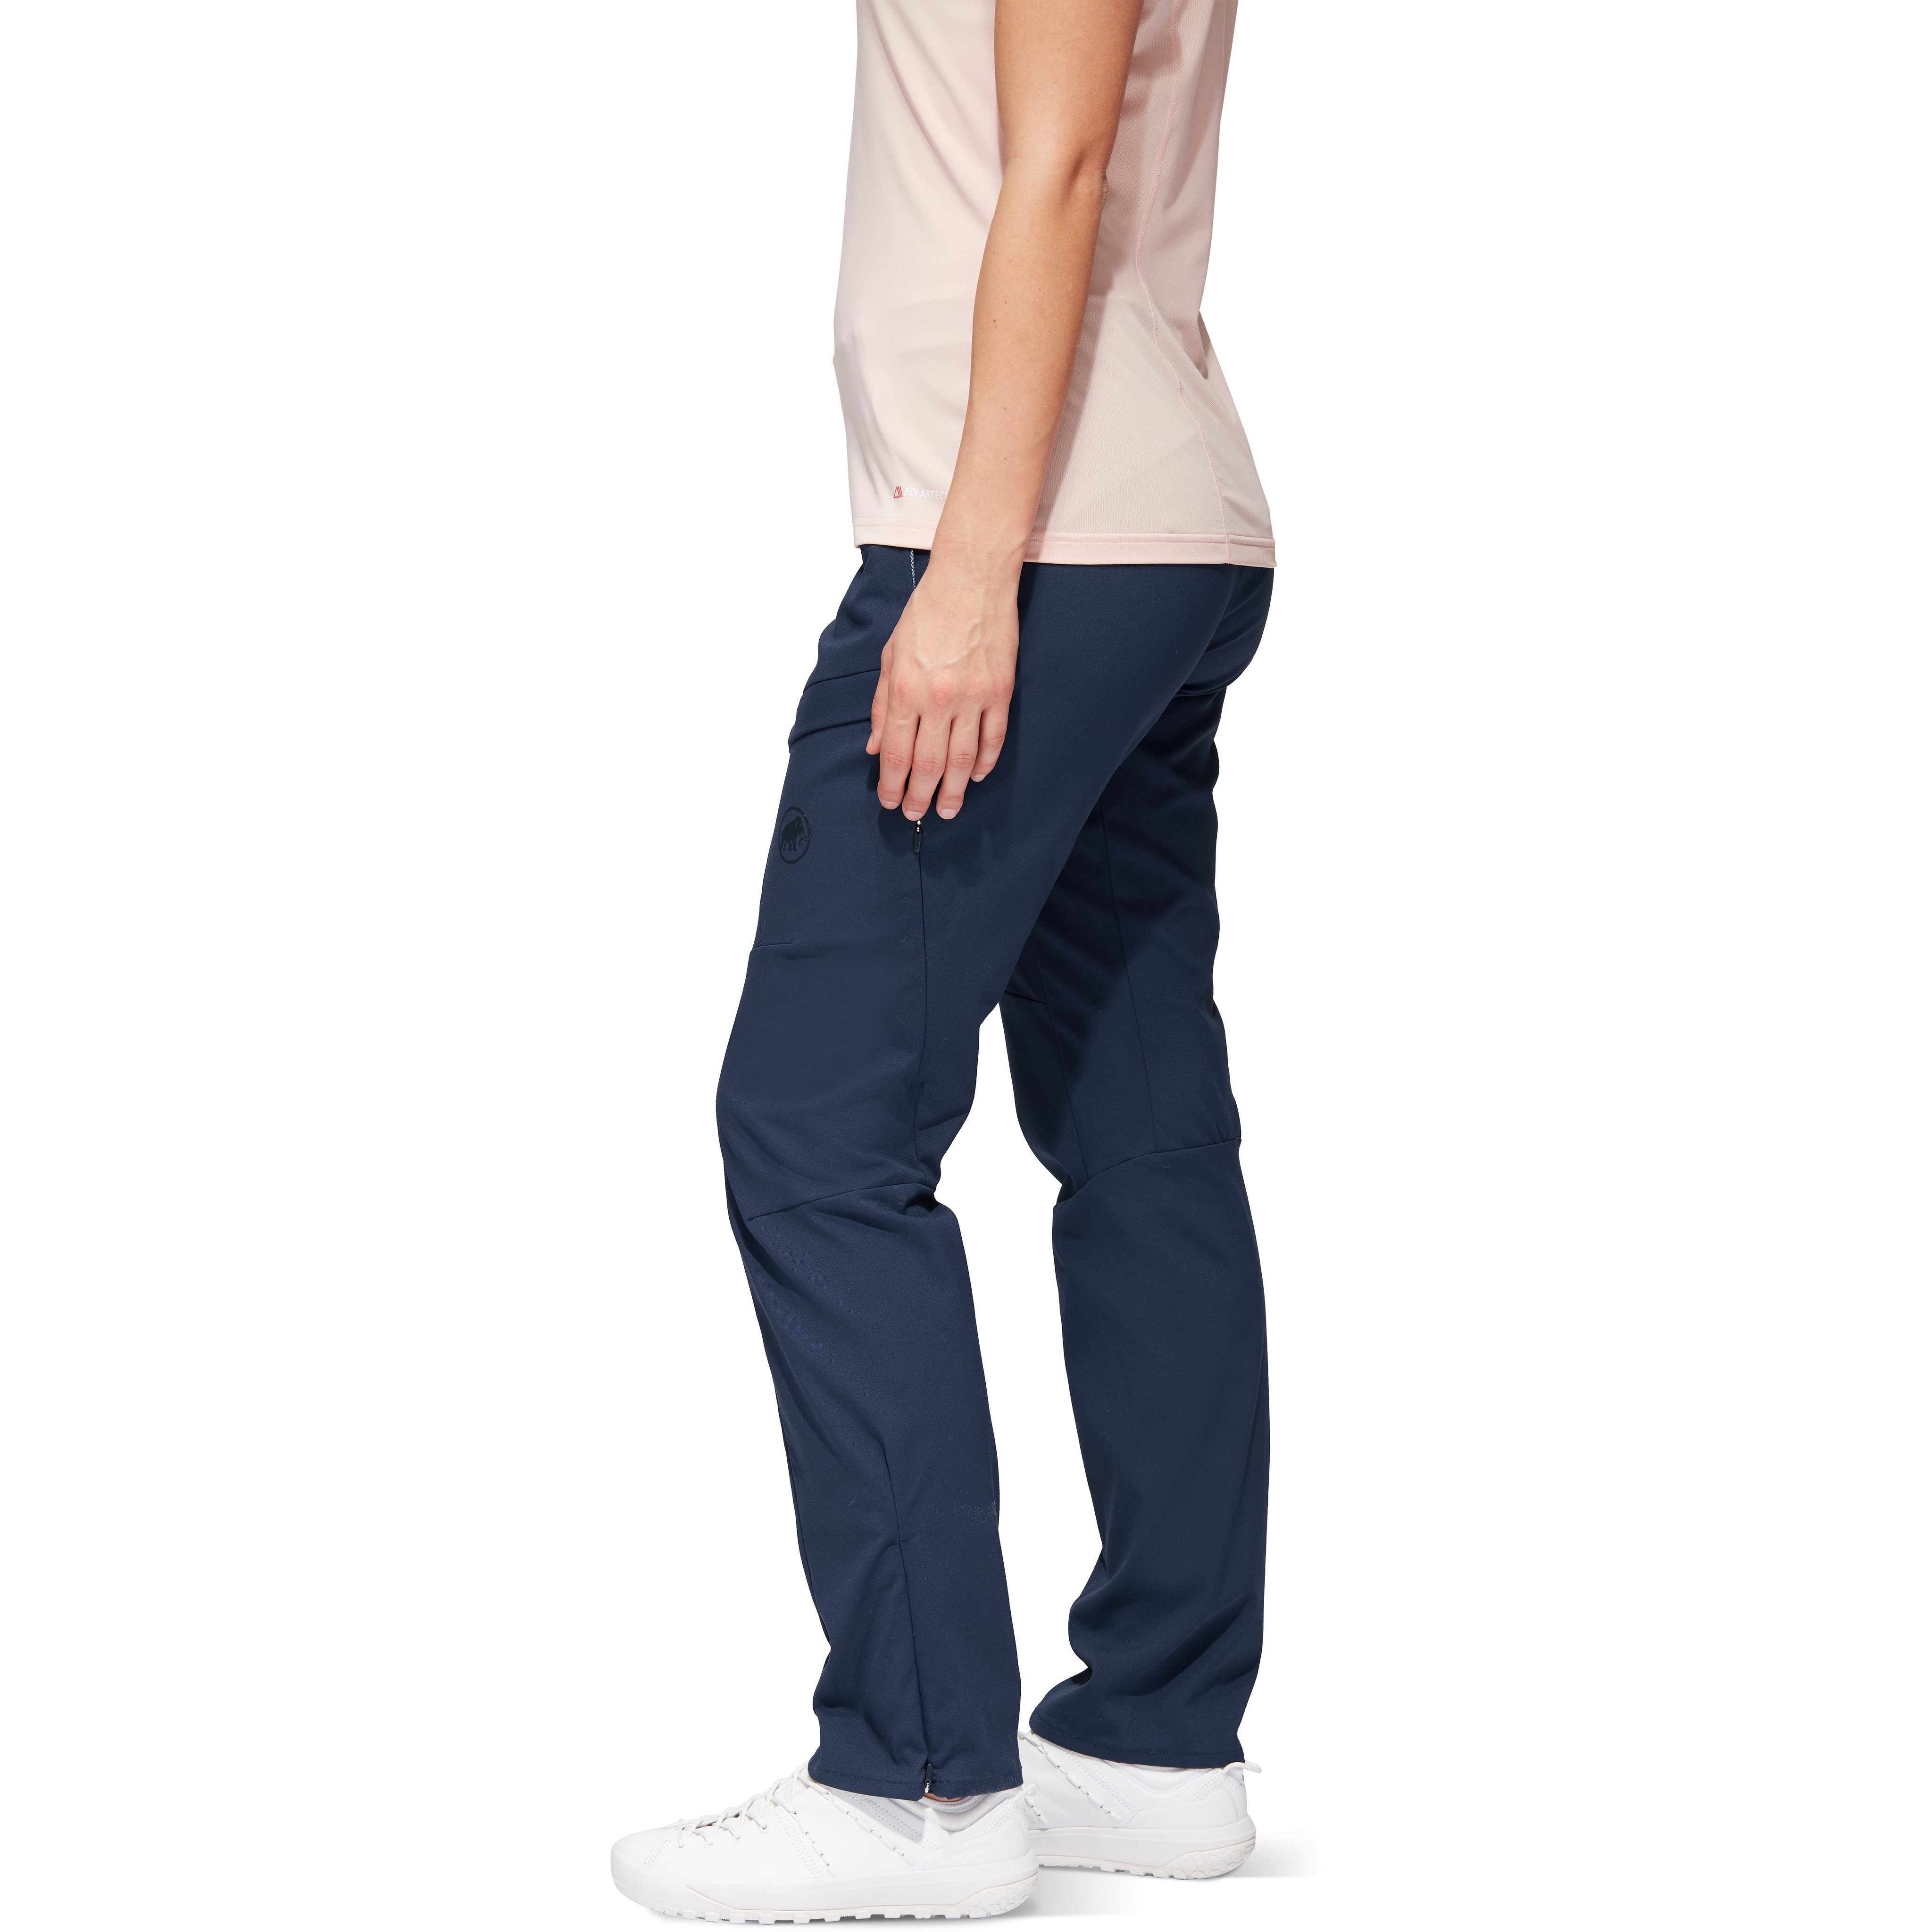 Zinal Pants Women product image